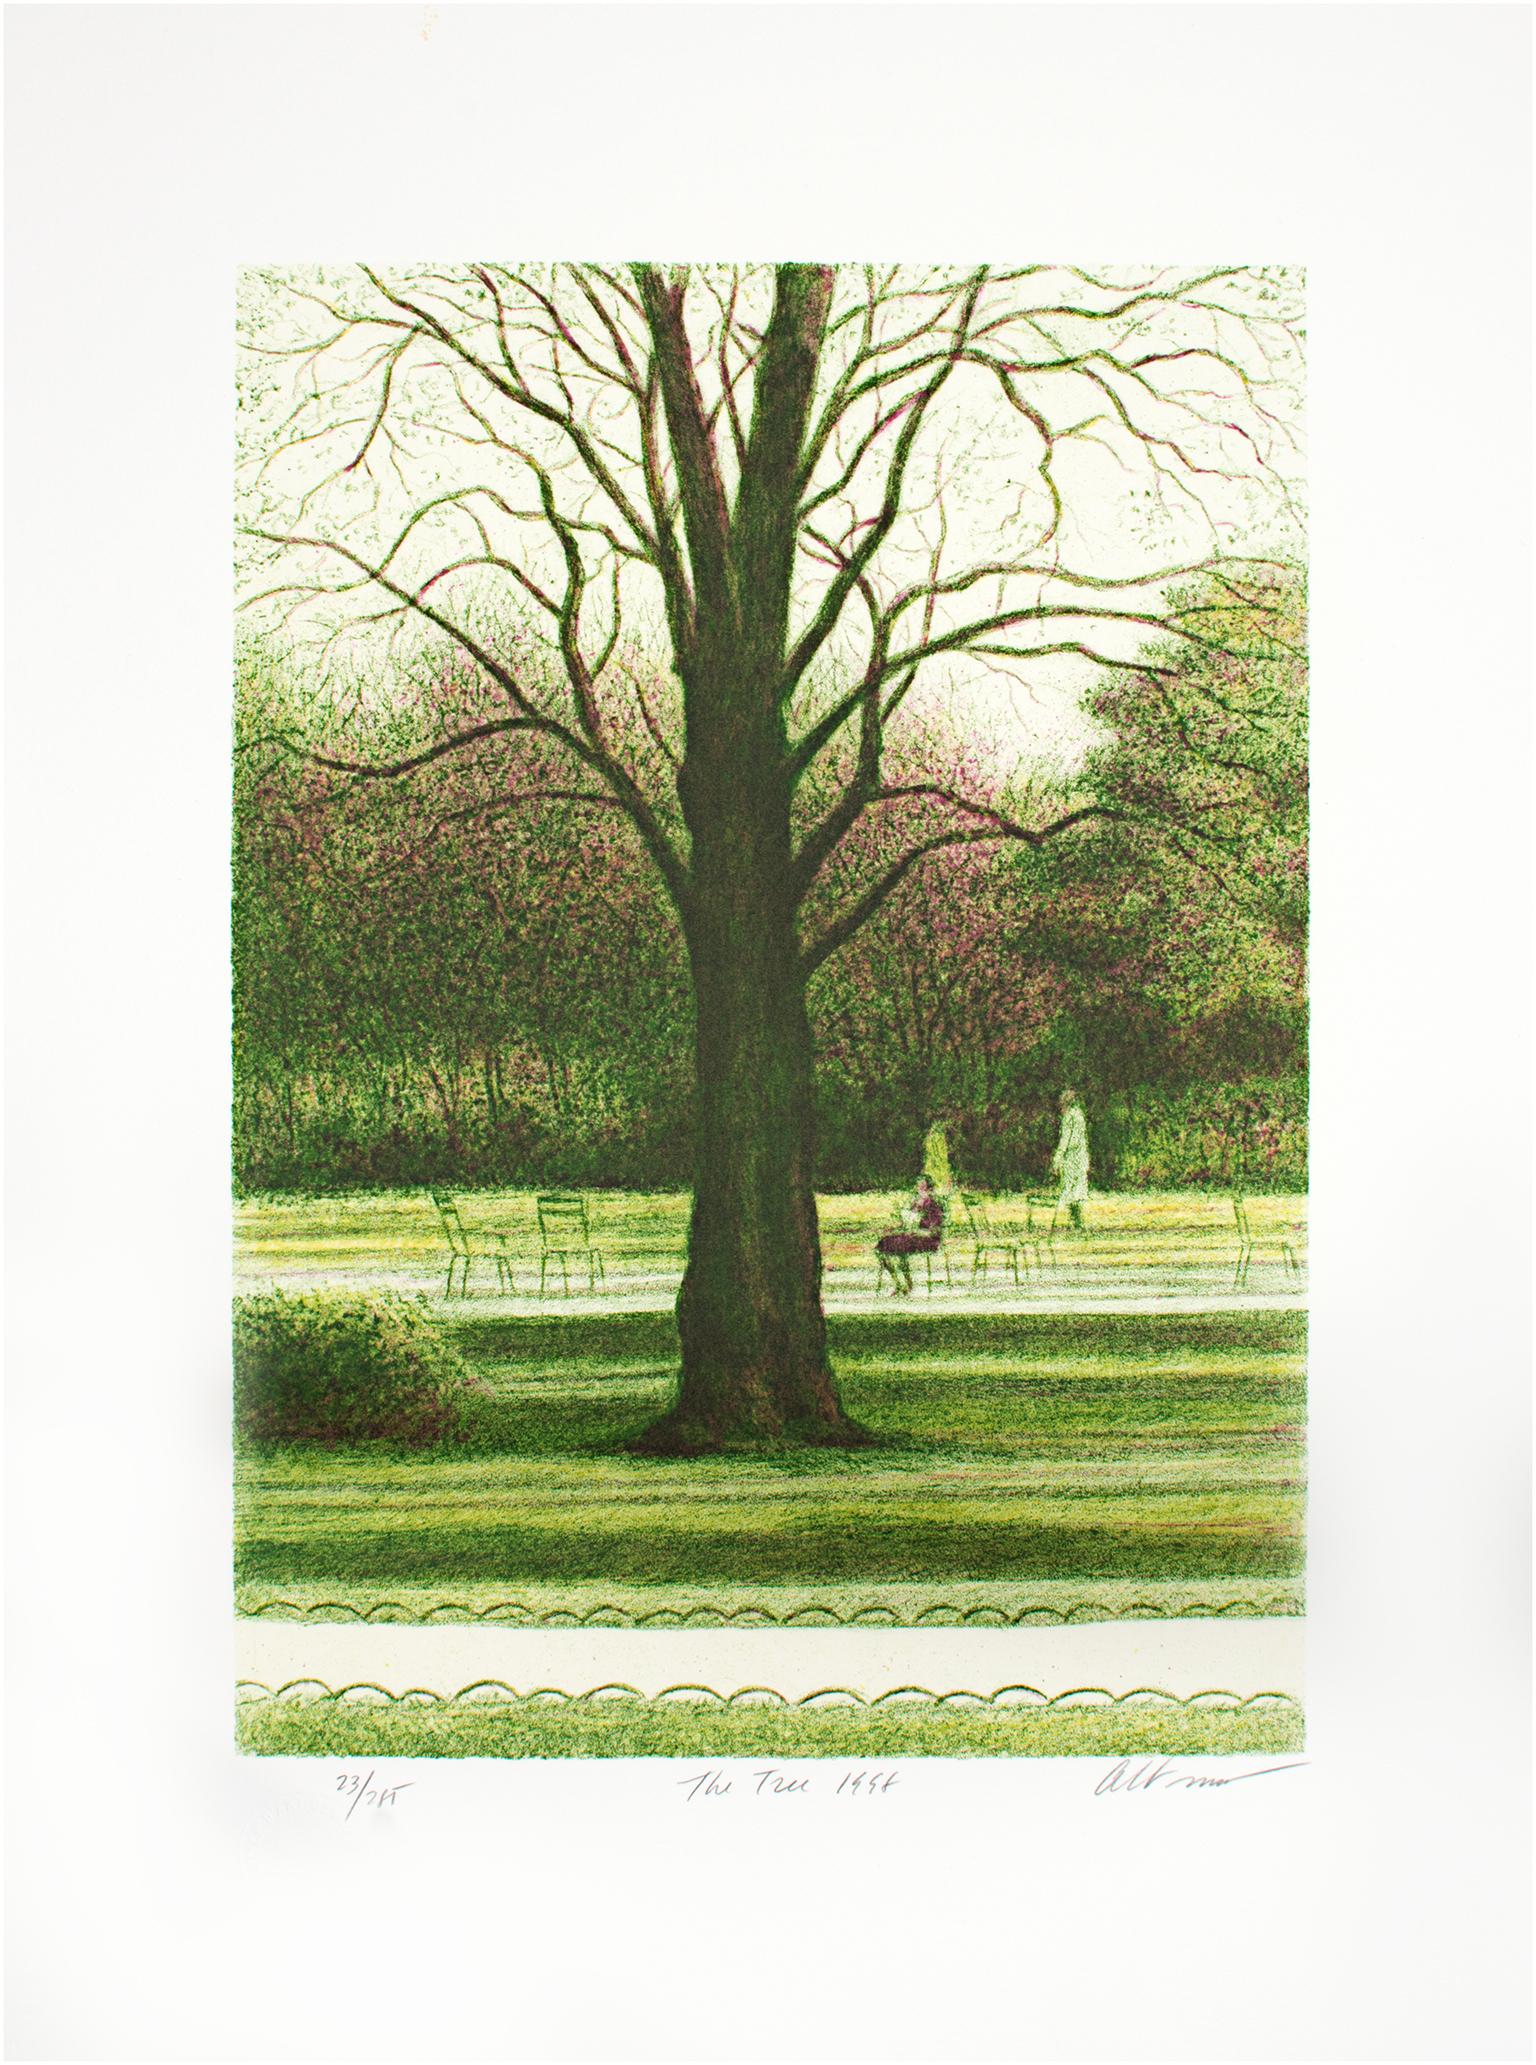 Harold Altman Landscape Print - Contemporary color lithograph landscape trees outdoor park scene signed